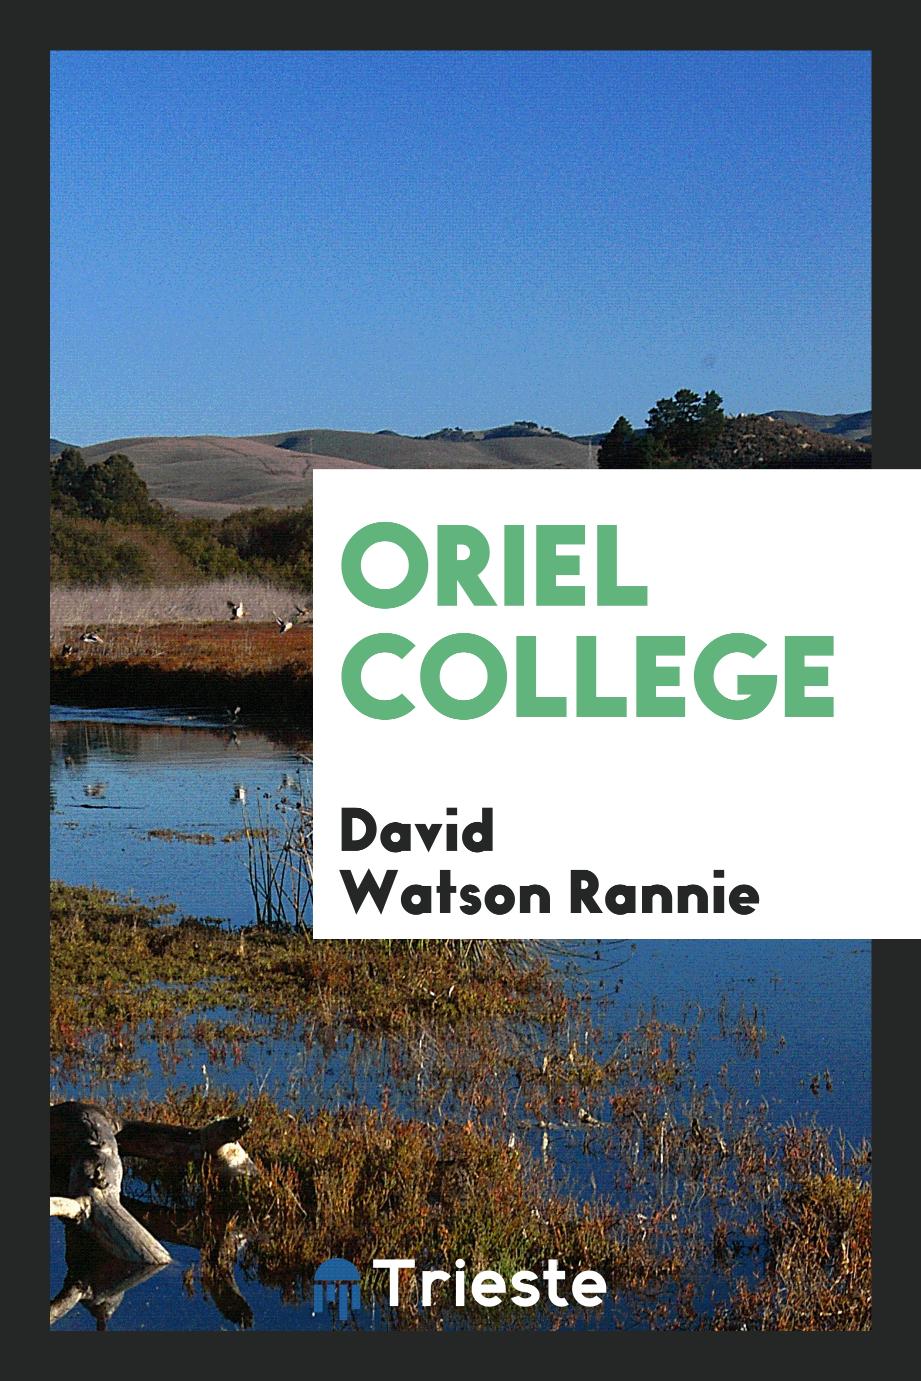 Oriel college